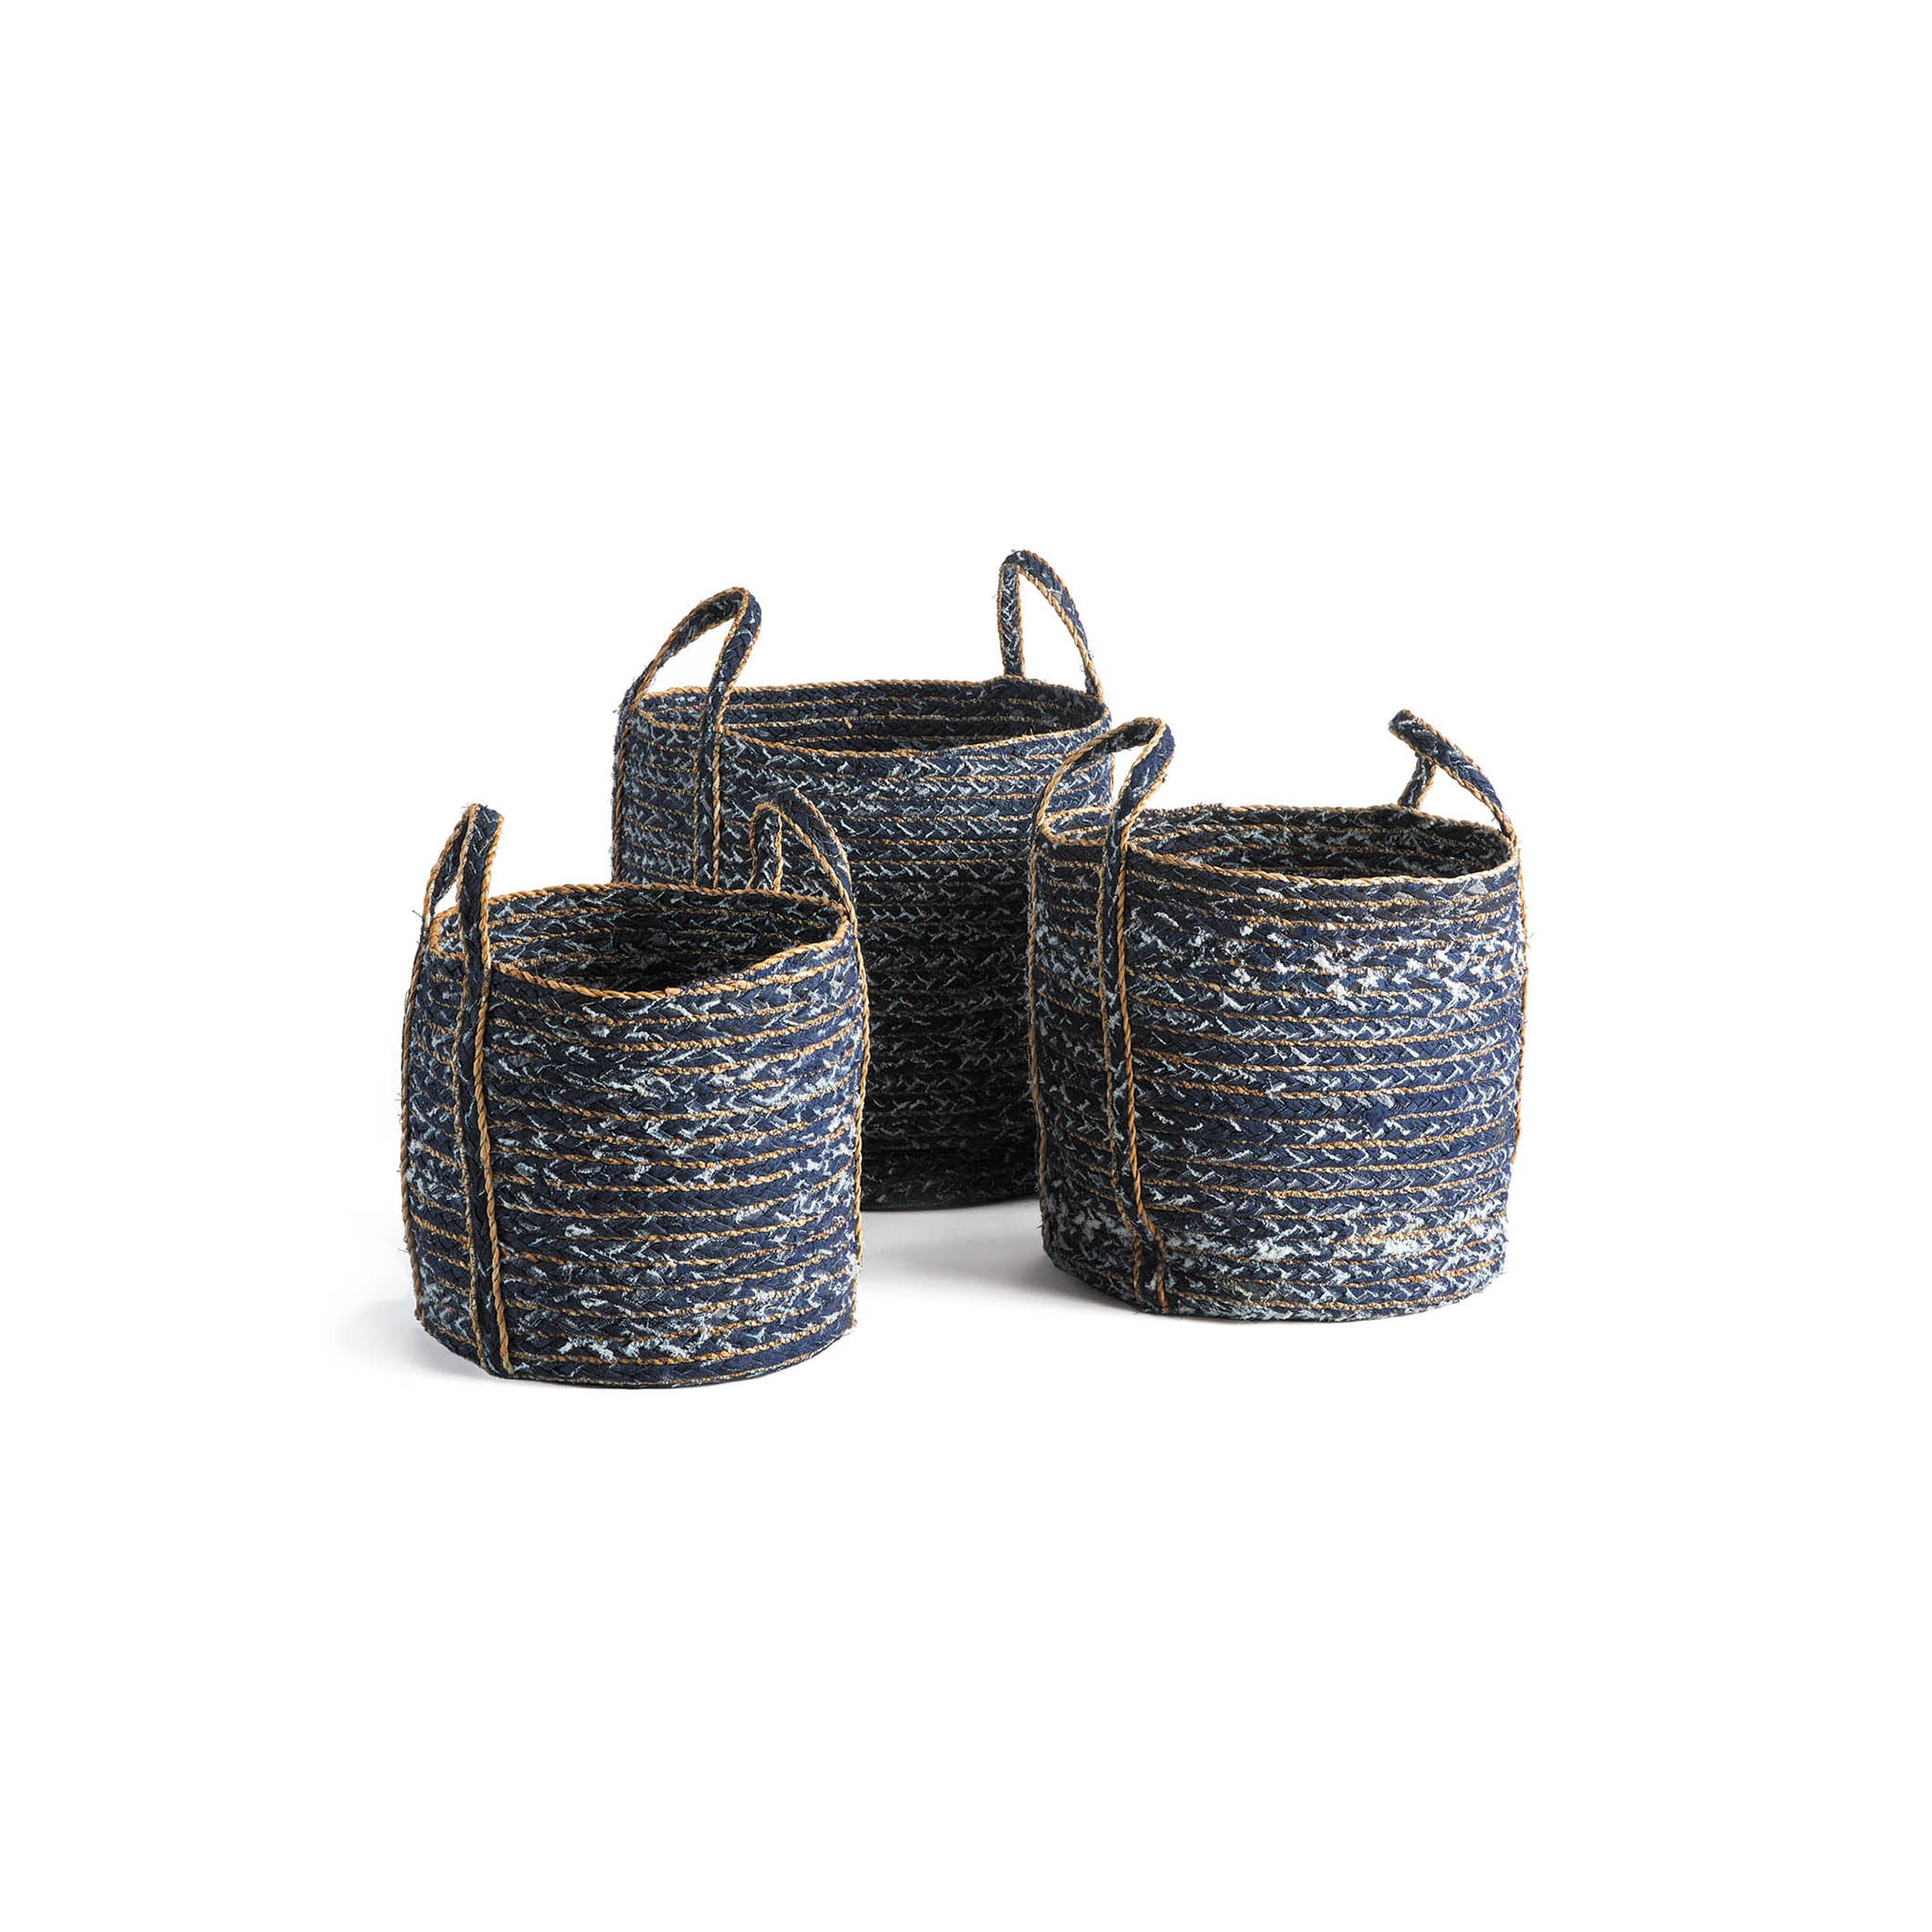 Deep Blue Denim Baskets, set of 3